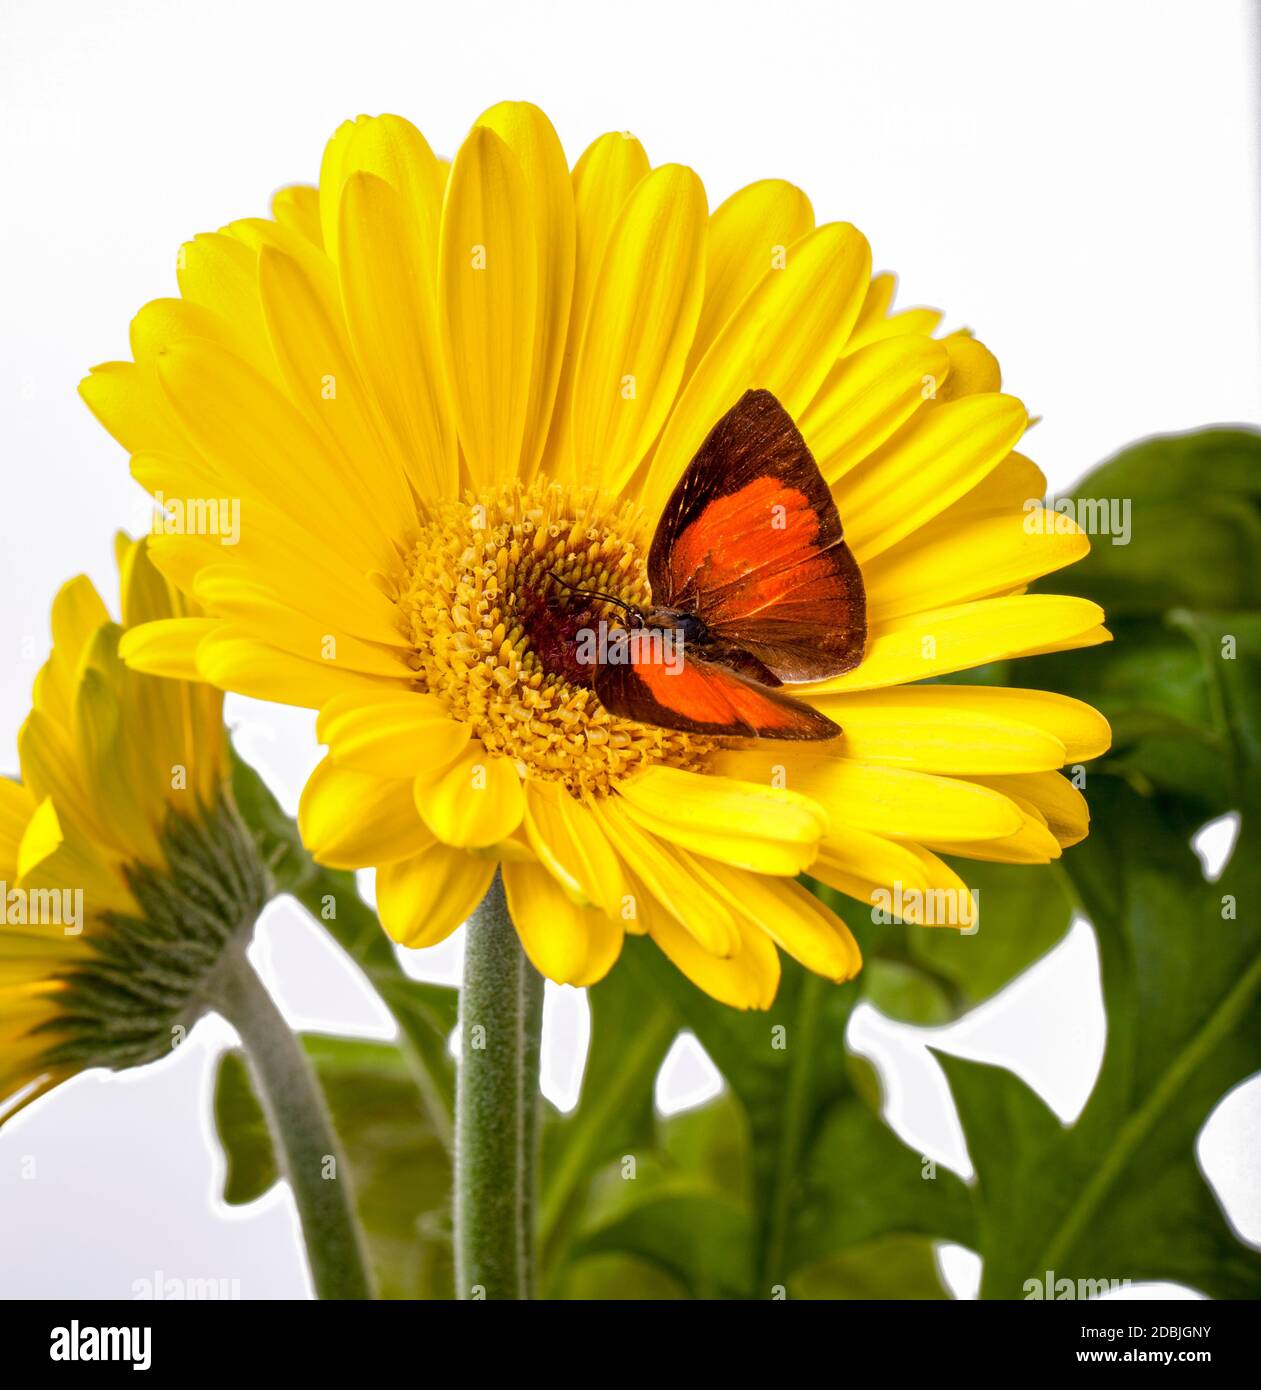 Sunbin Butterfly on a Yellow Gerbera Daisy Stock Photo